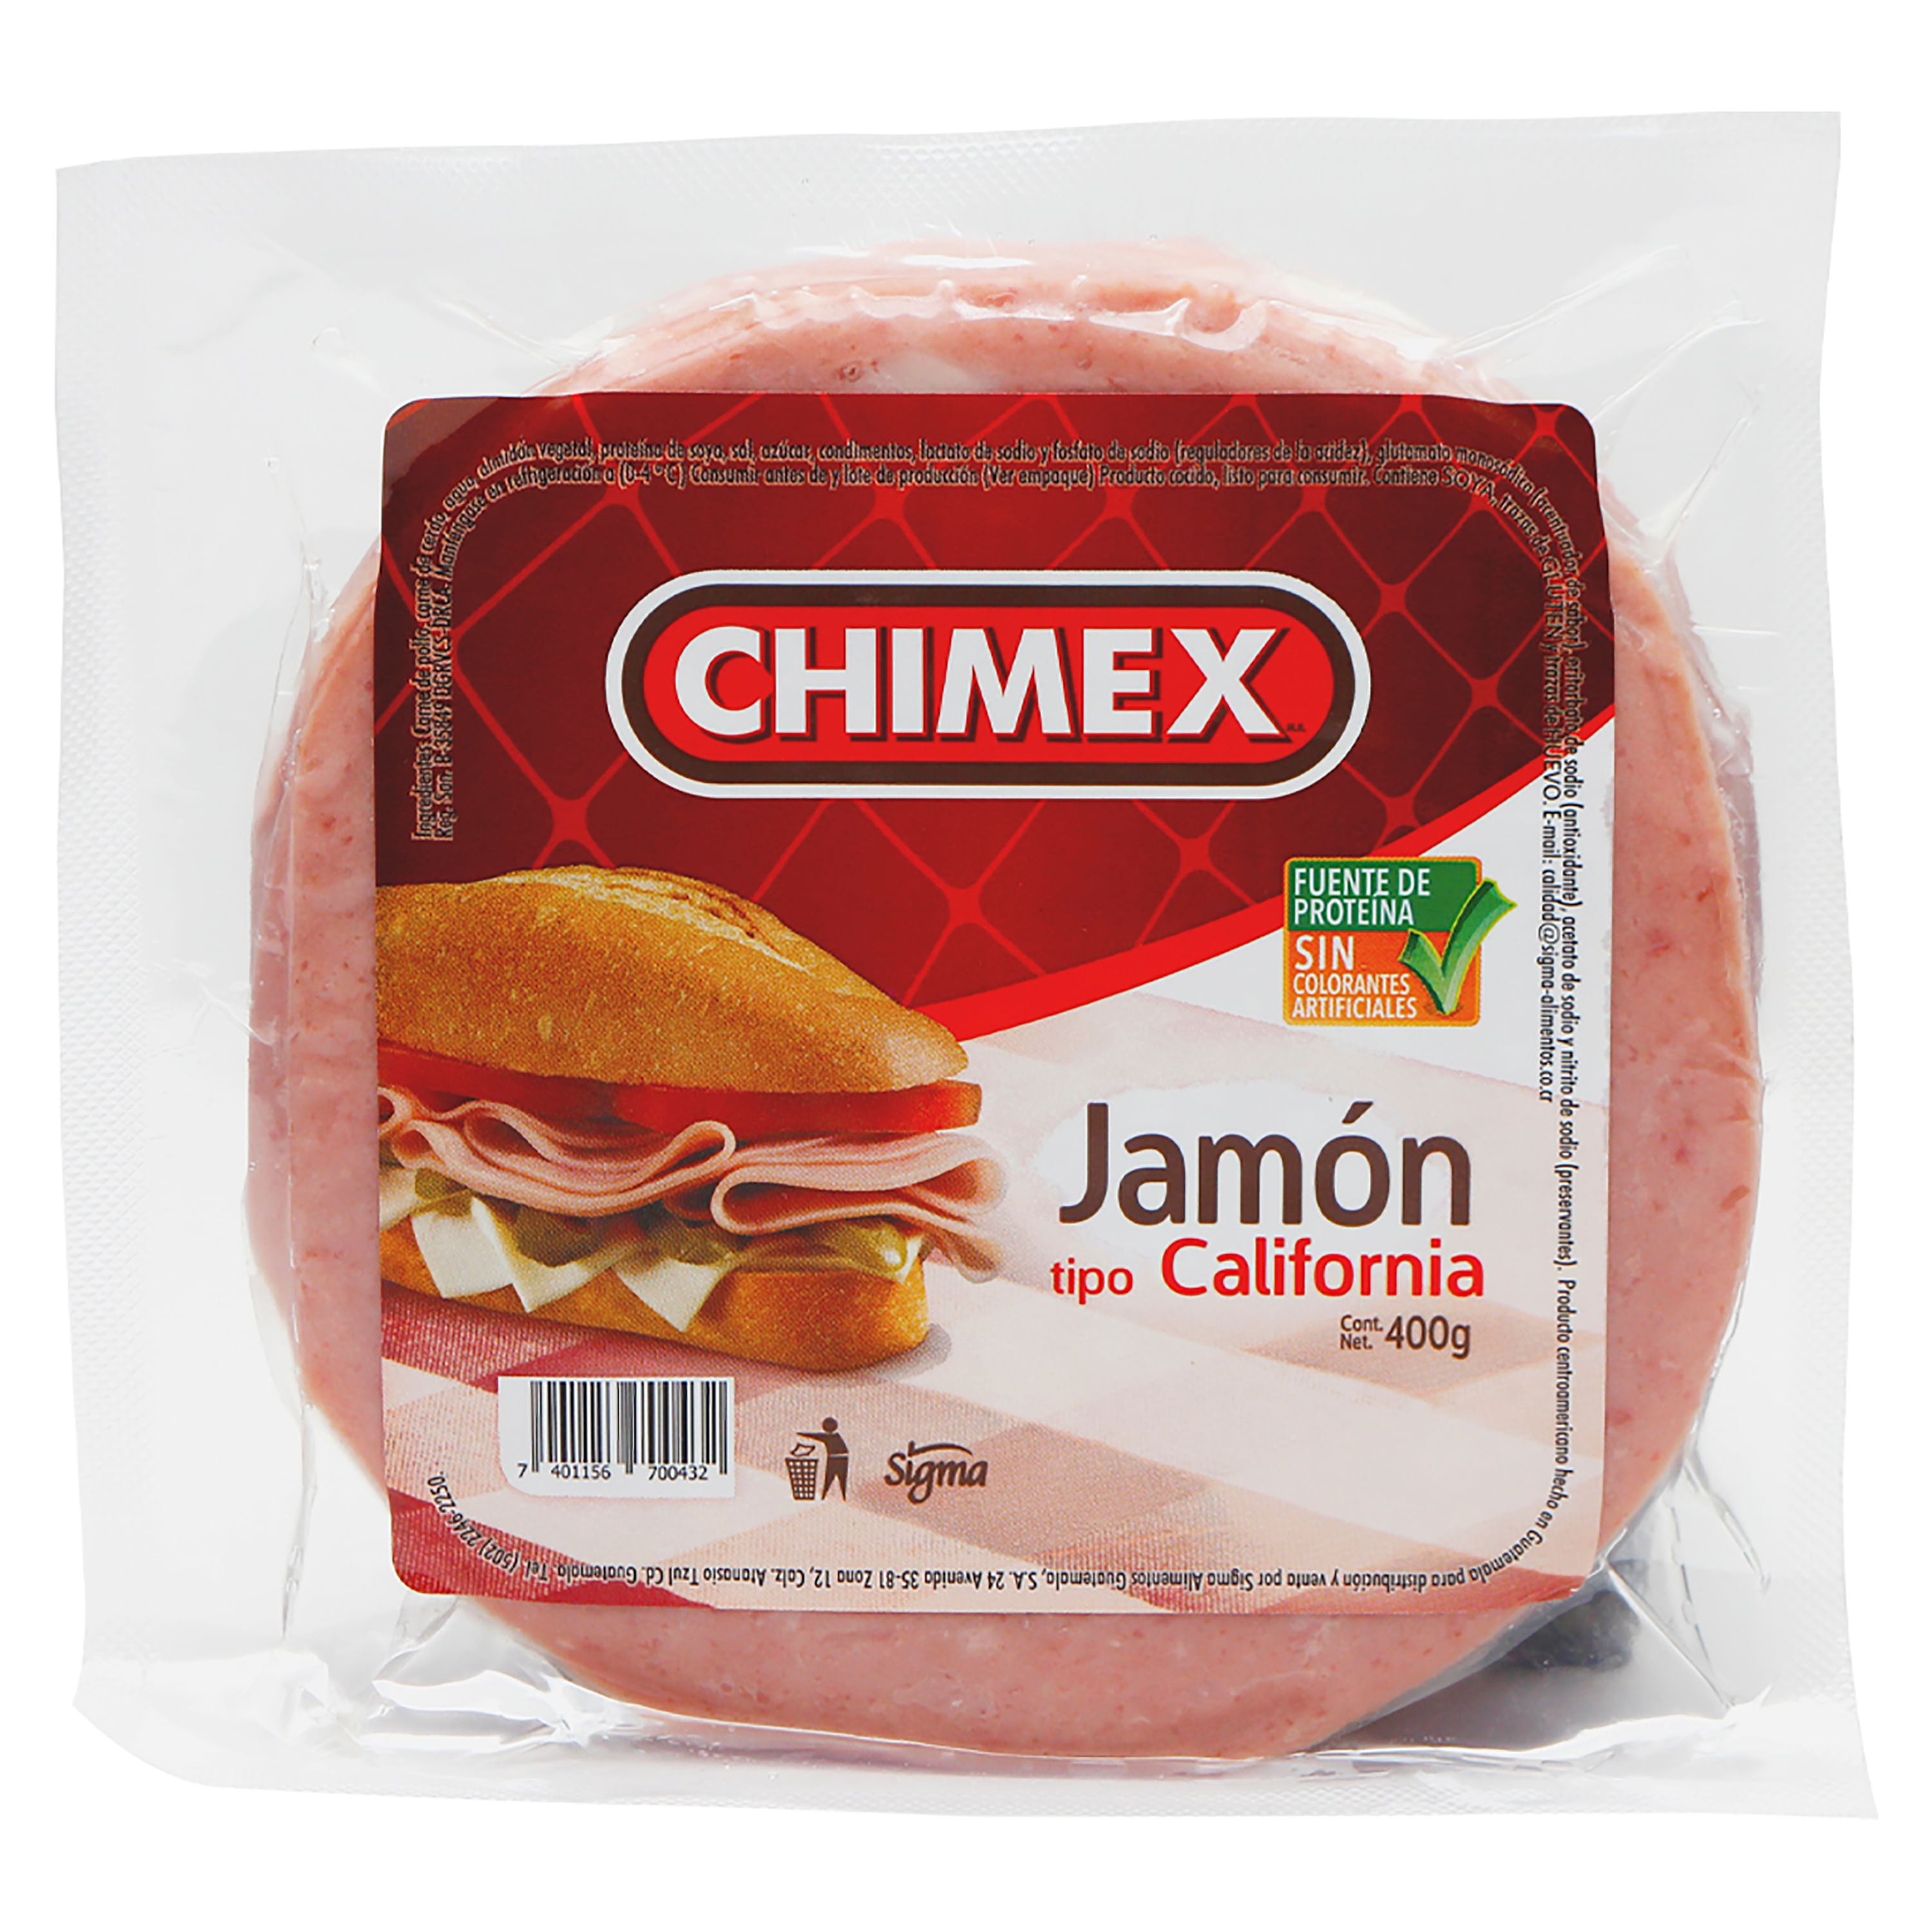 Jamon-Chimex-Tipo-California-400gr-1-30504